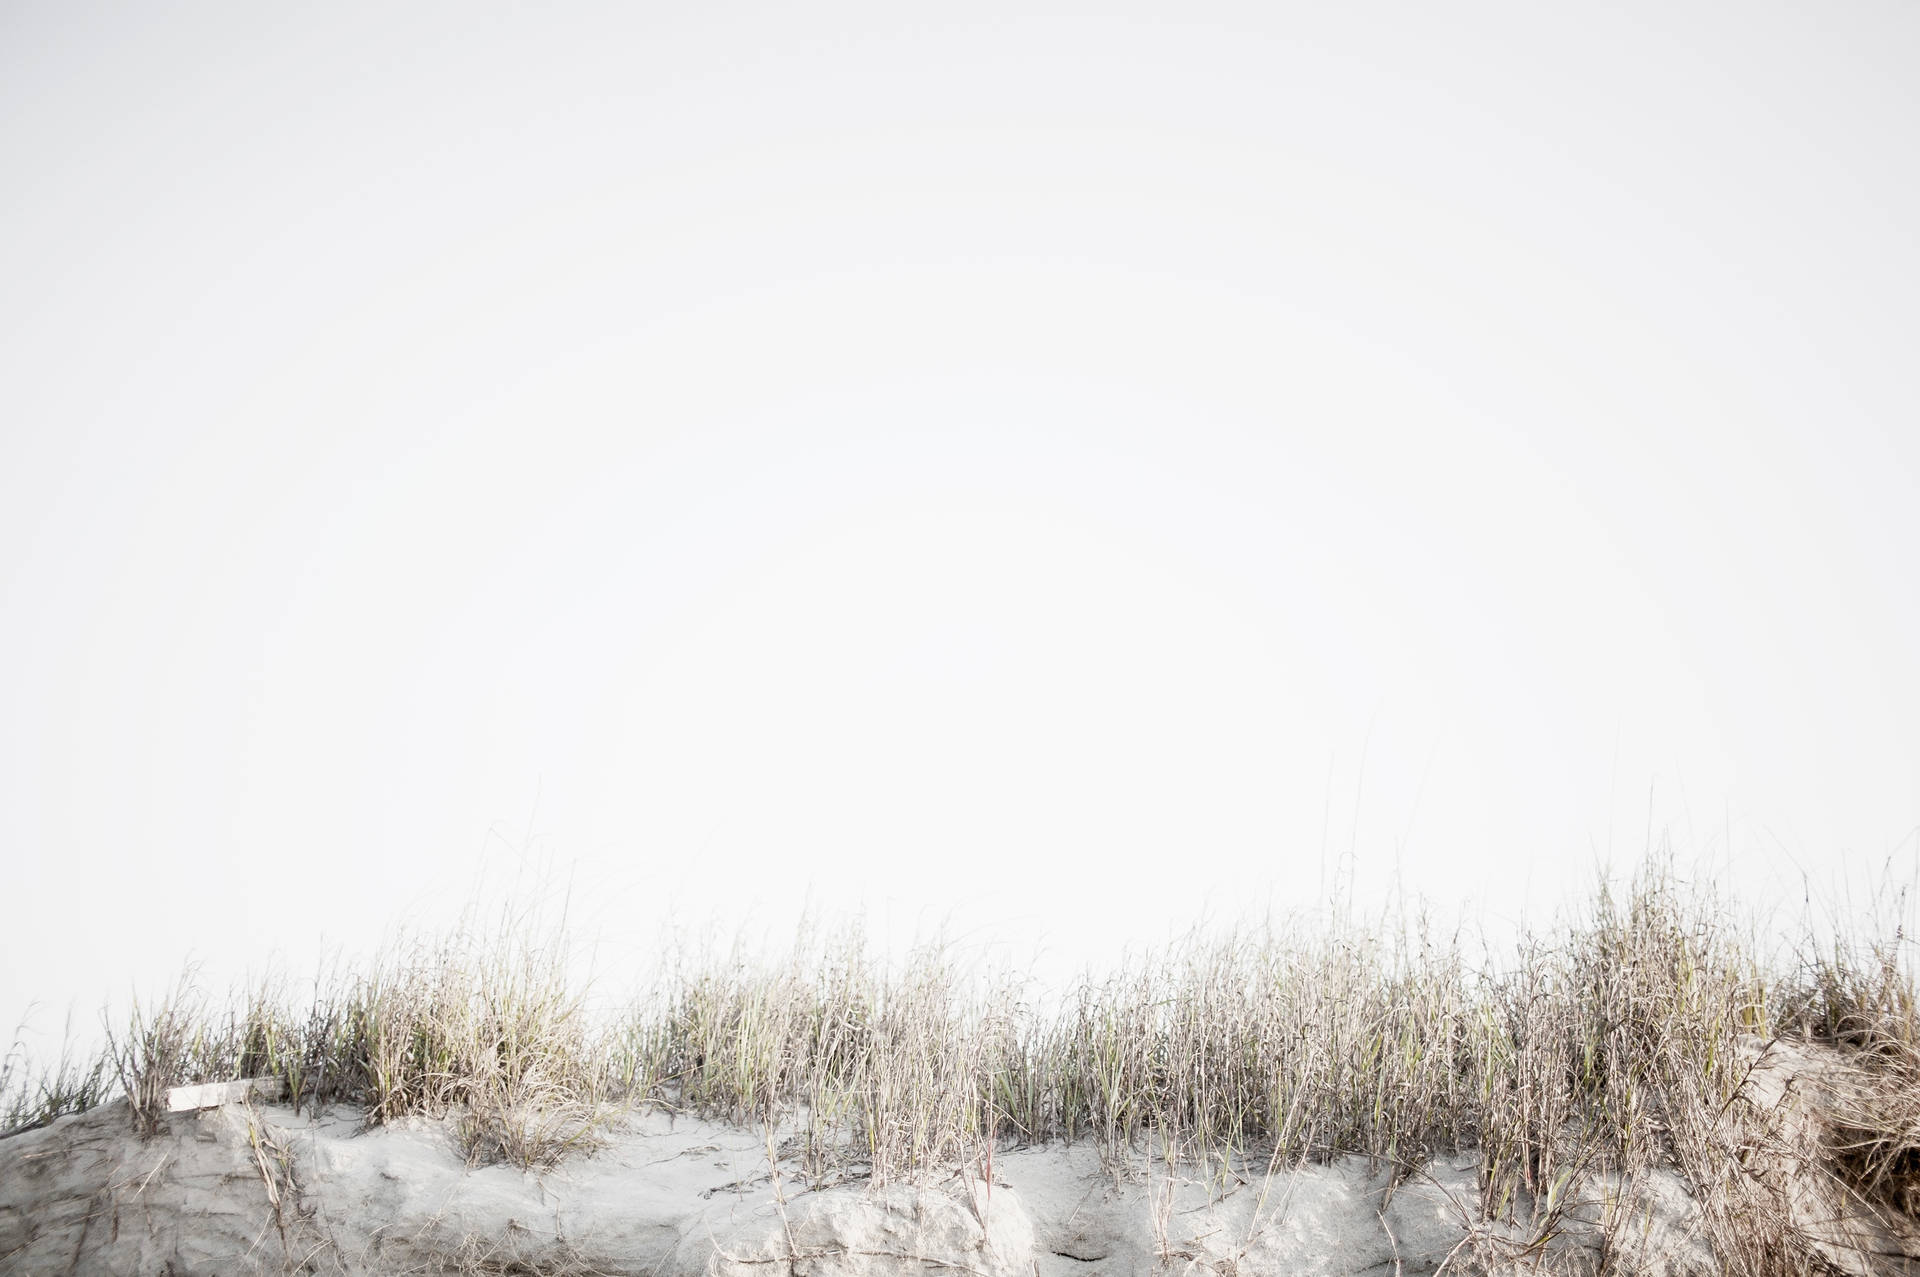 overlooking the ocean - En mand står på en sanddynge og overser havet Wallpaper